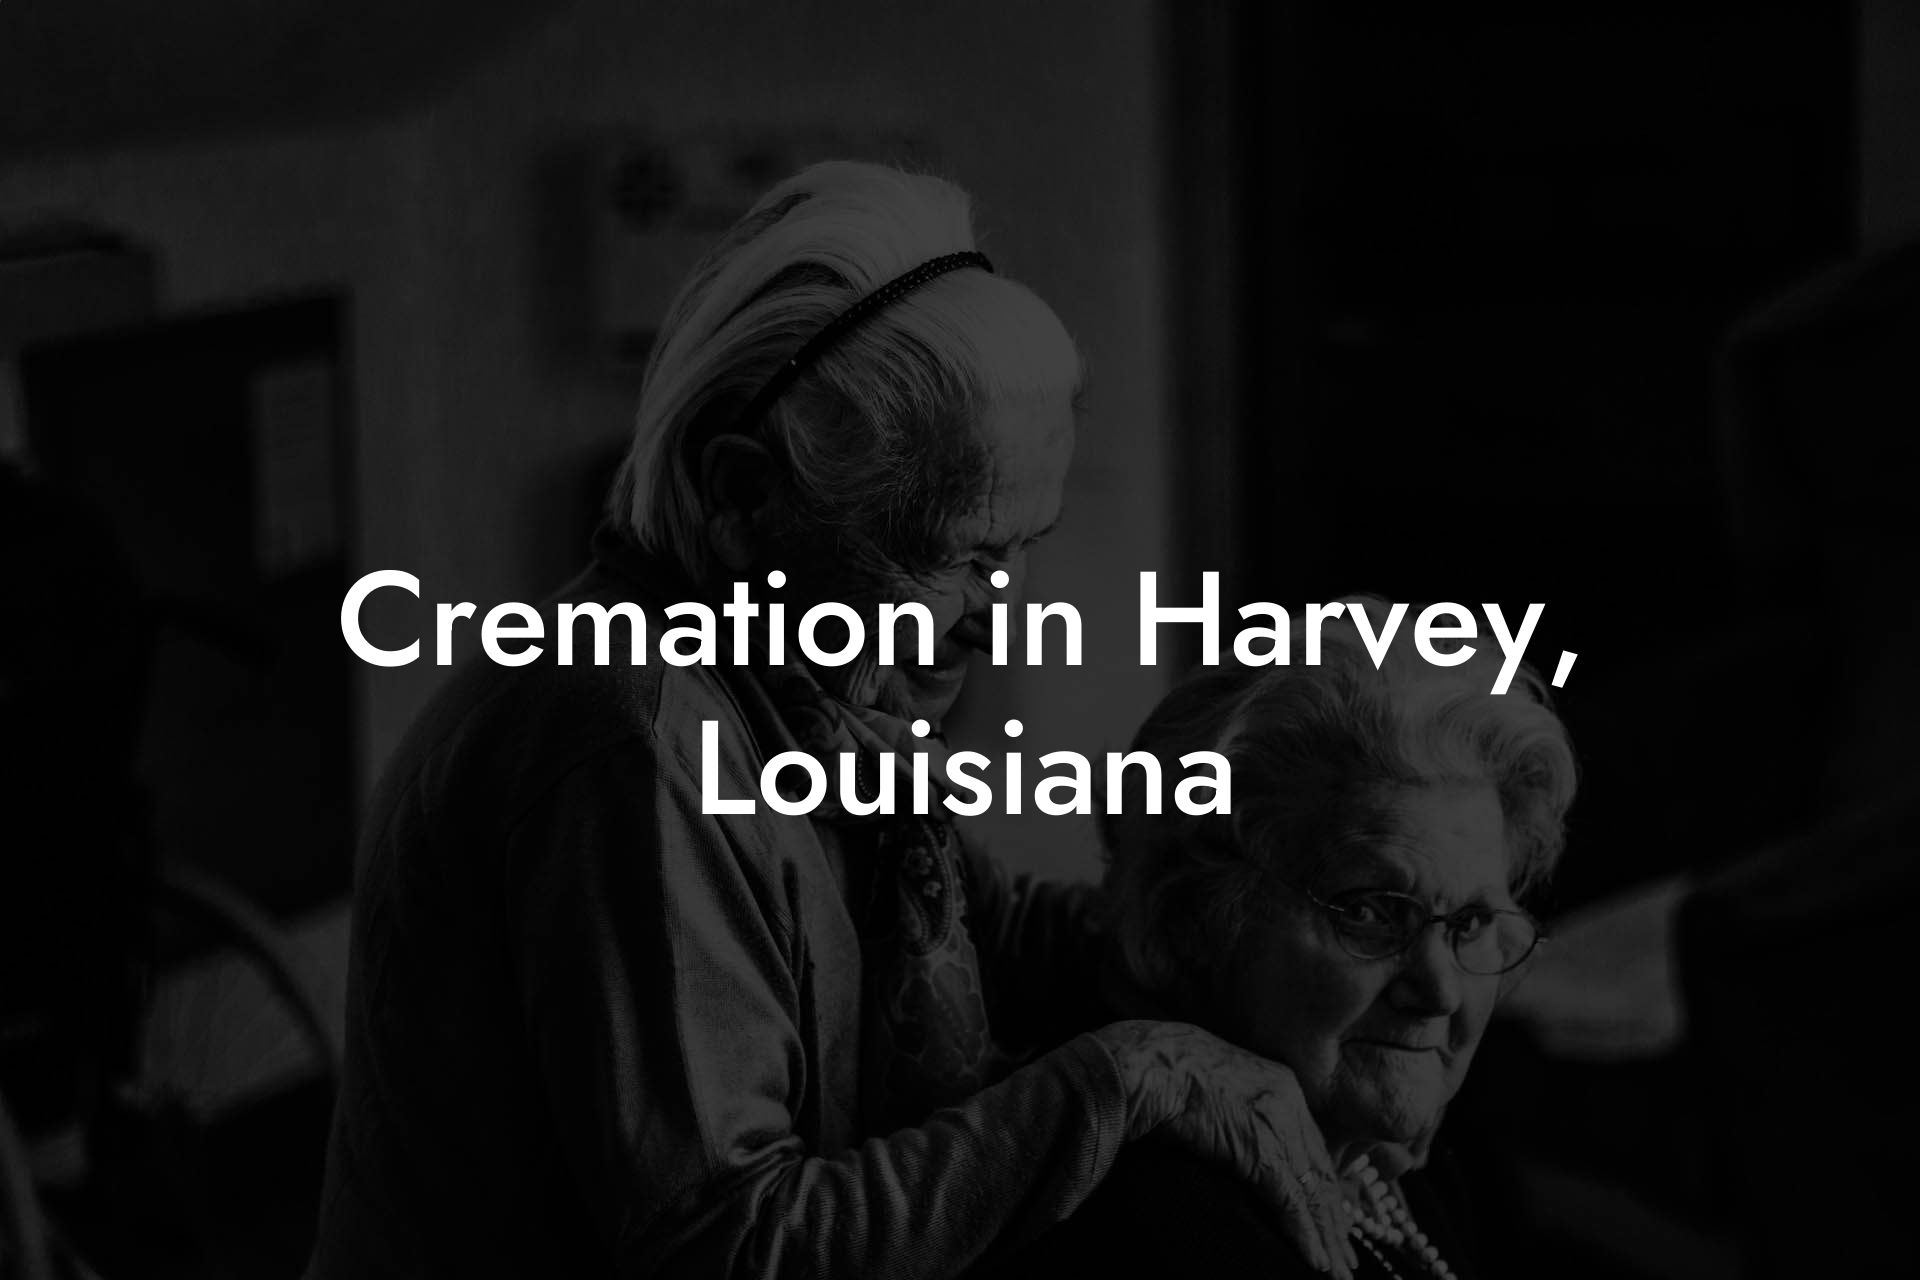 Cremation in Harvey, Louisiana